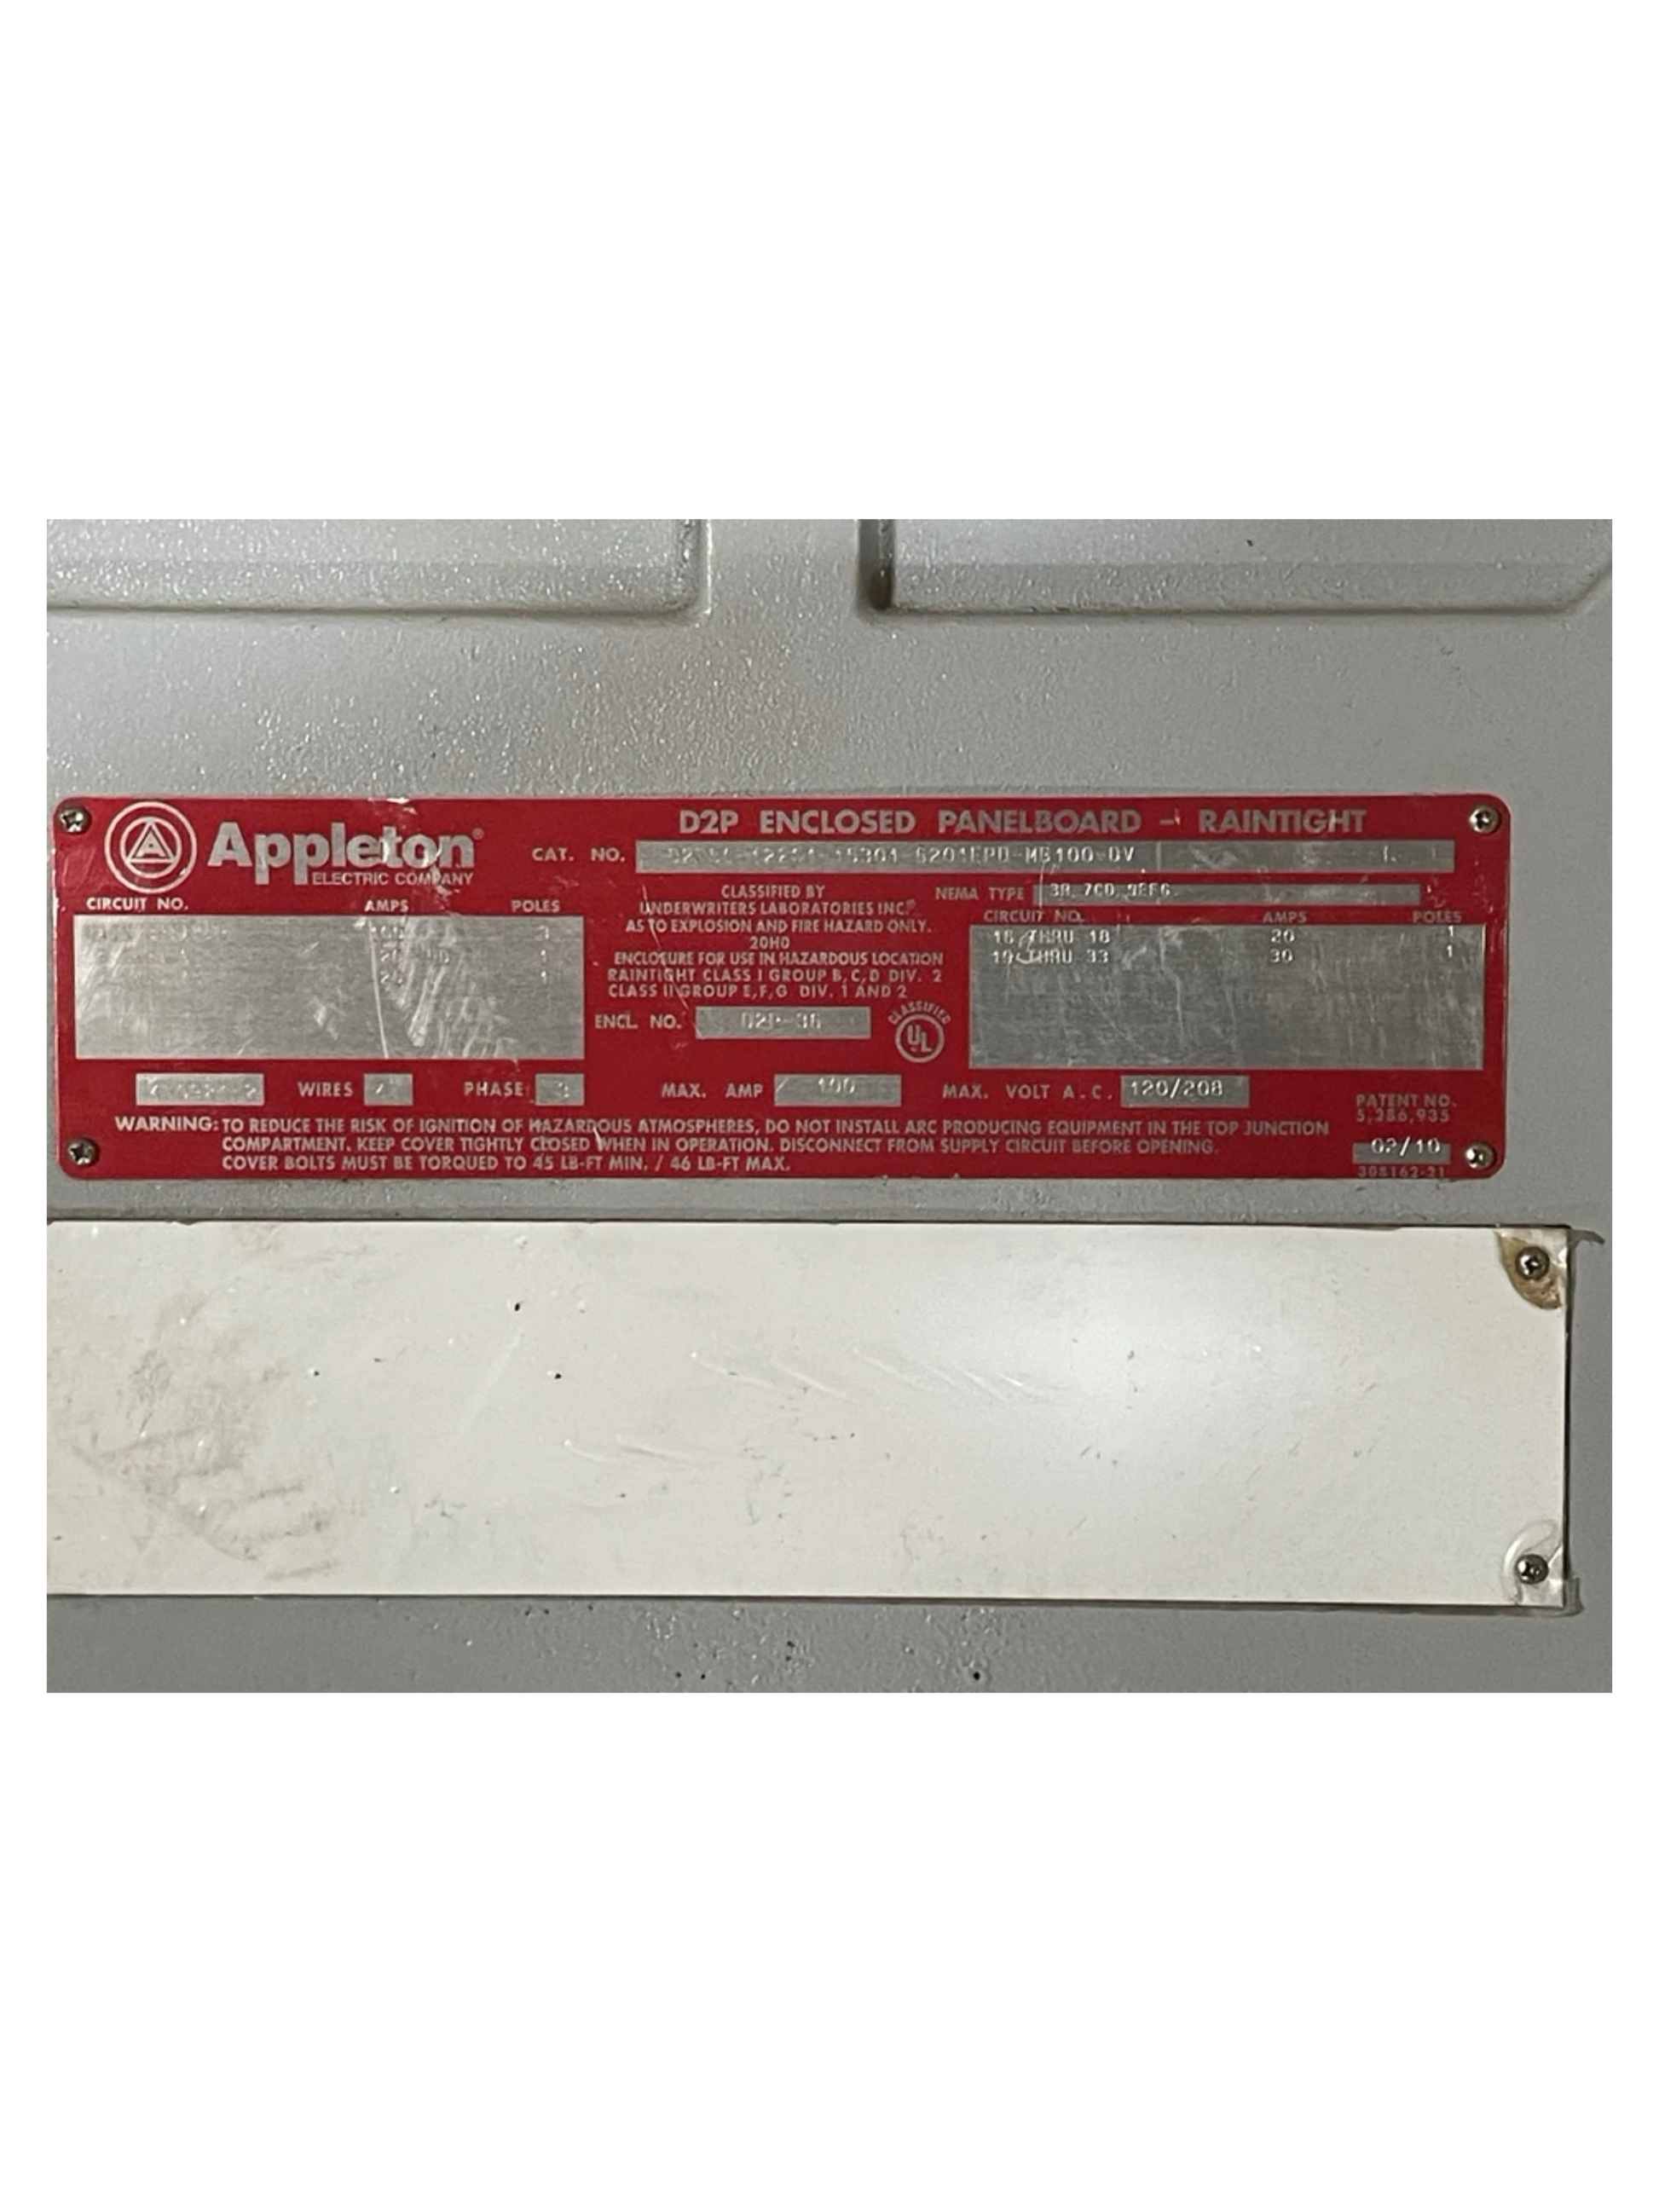 Appleton D2P-36 Enclosed Panelboard Raintight